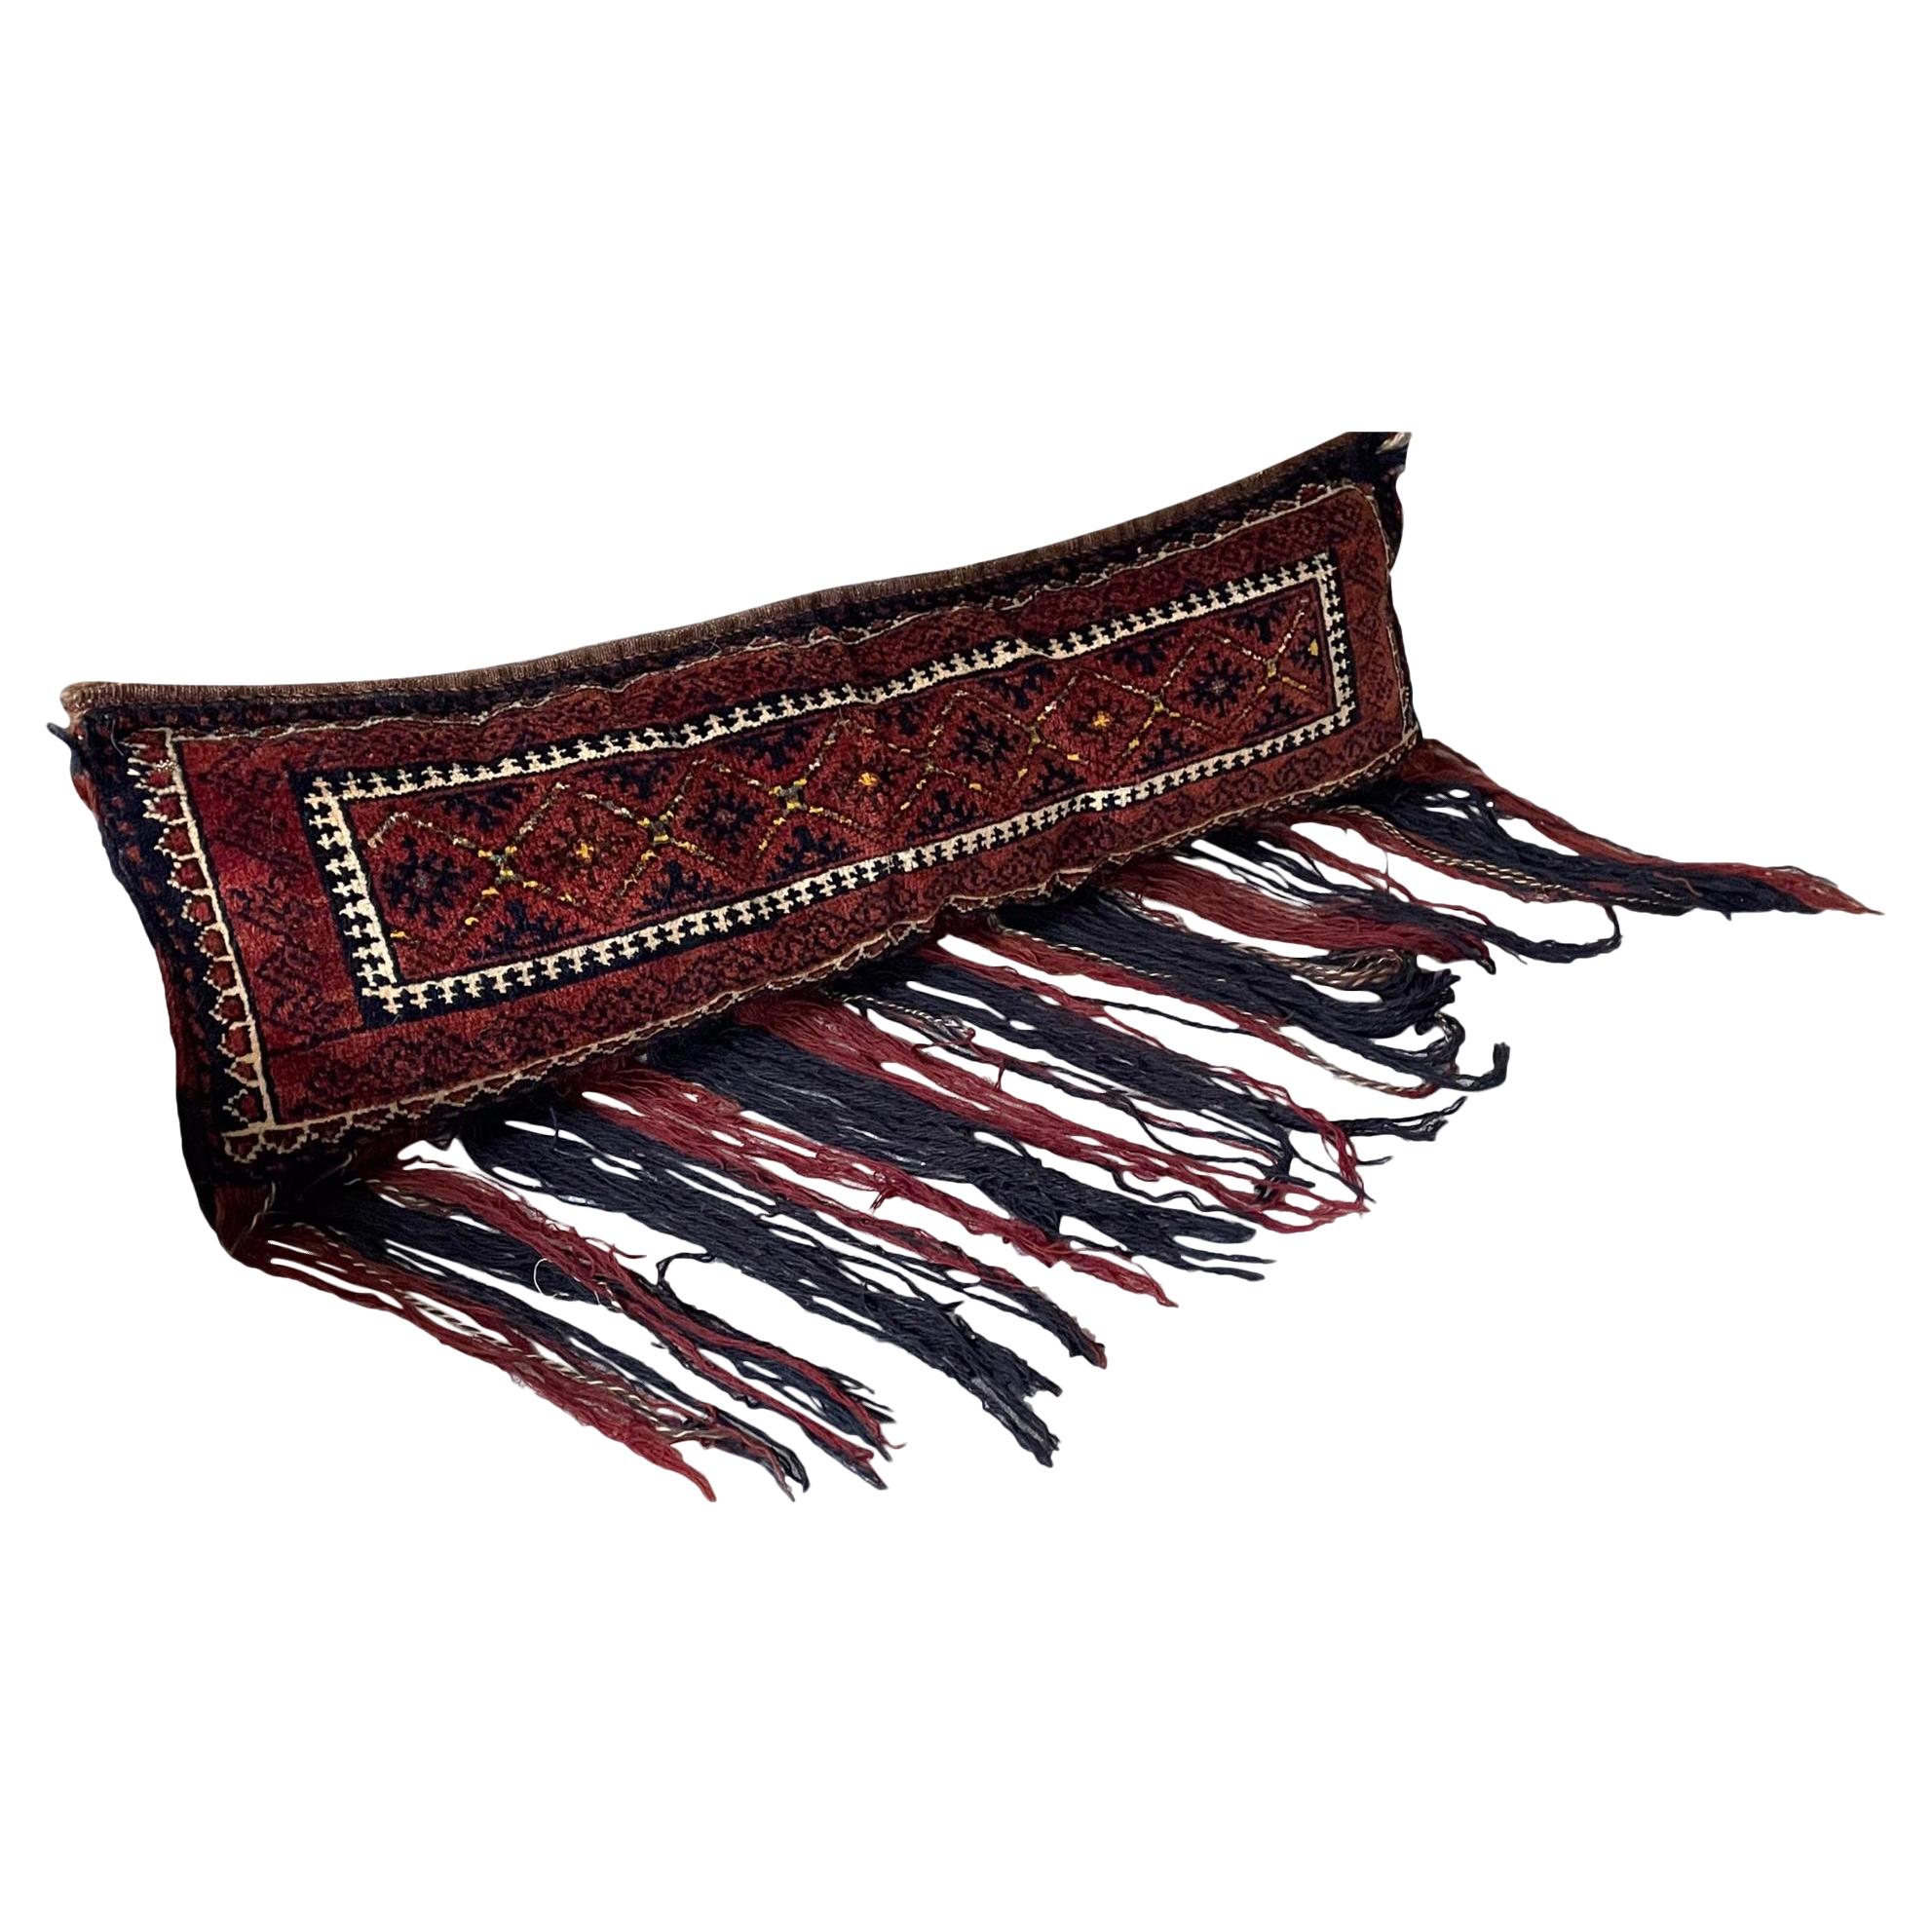 Grand coussin brodé de tapis Gypsy Oriental Salt Bag ou sac à sel